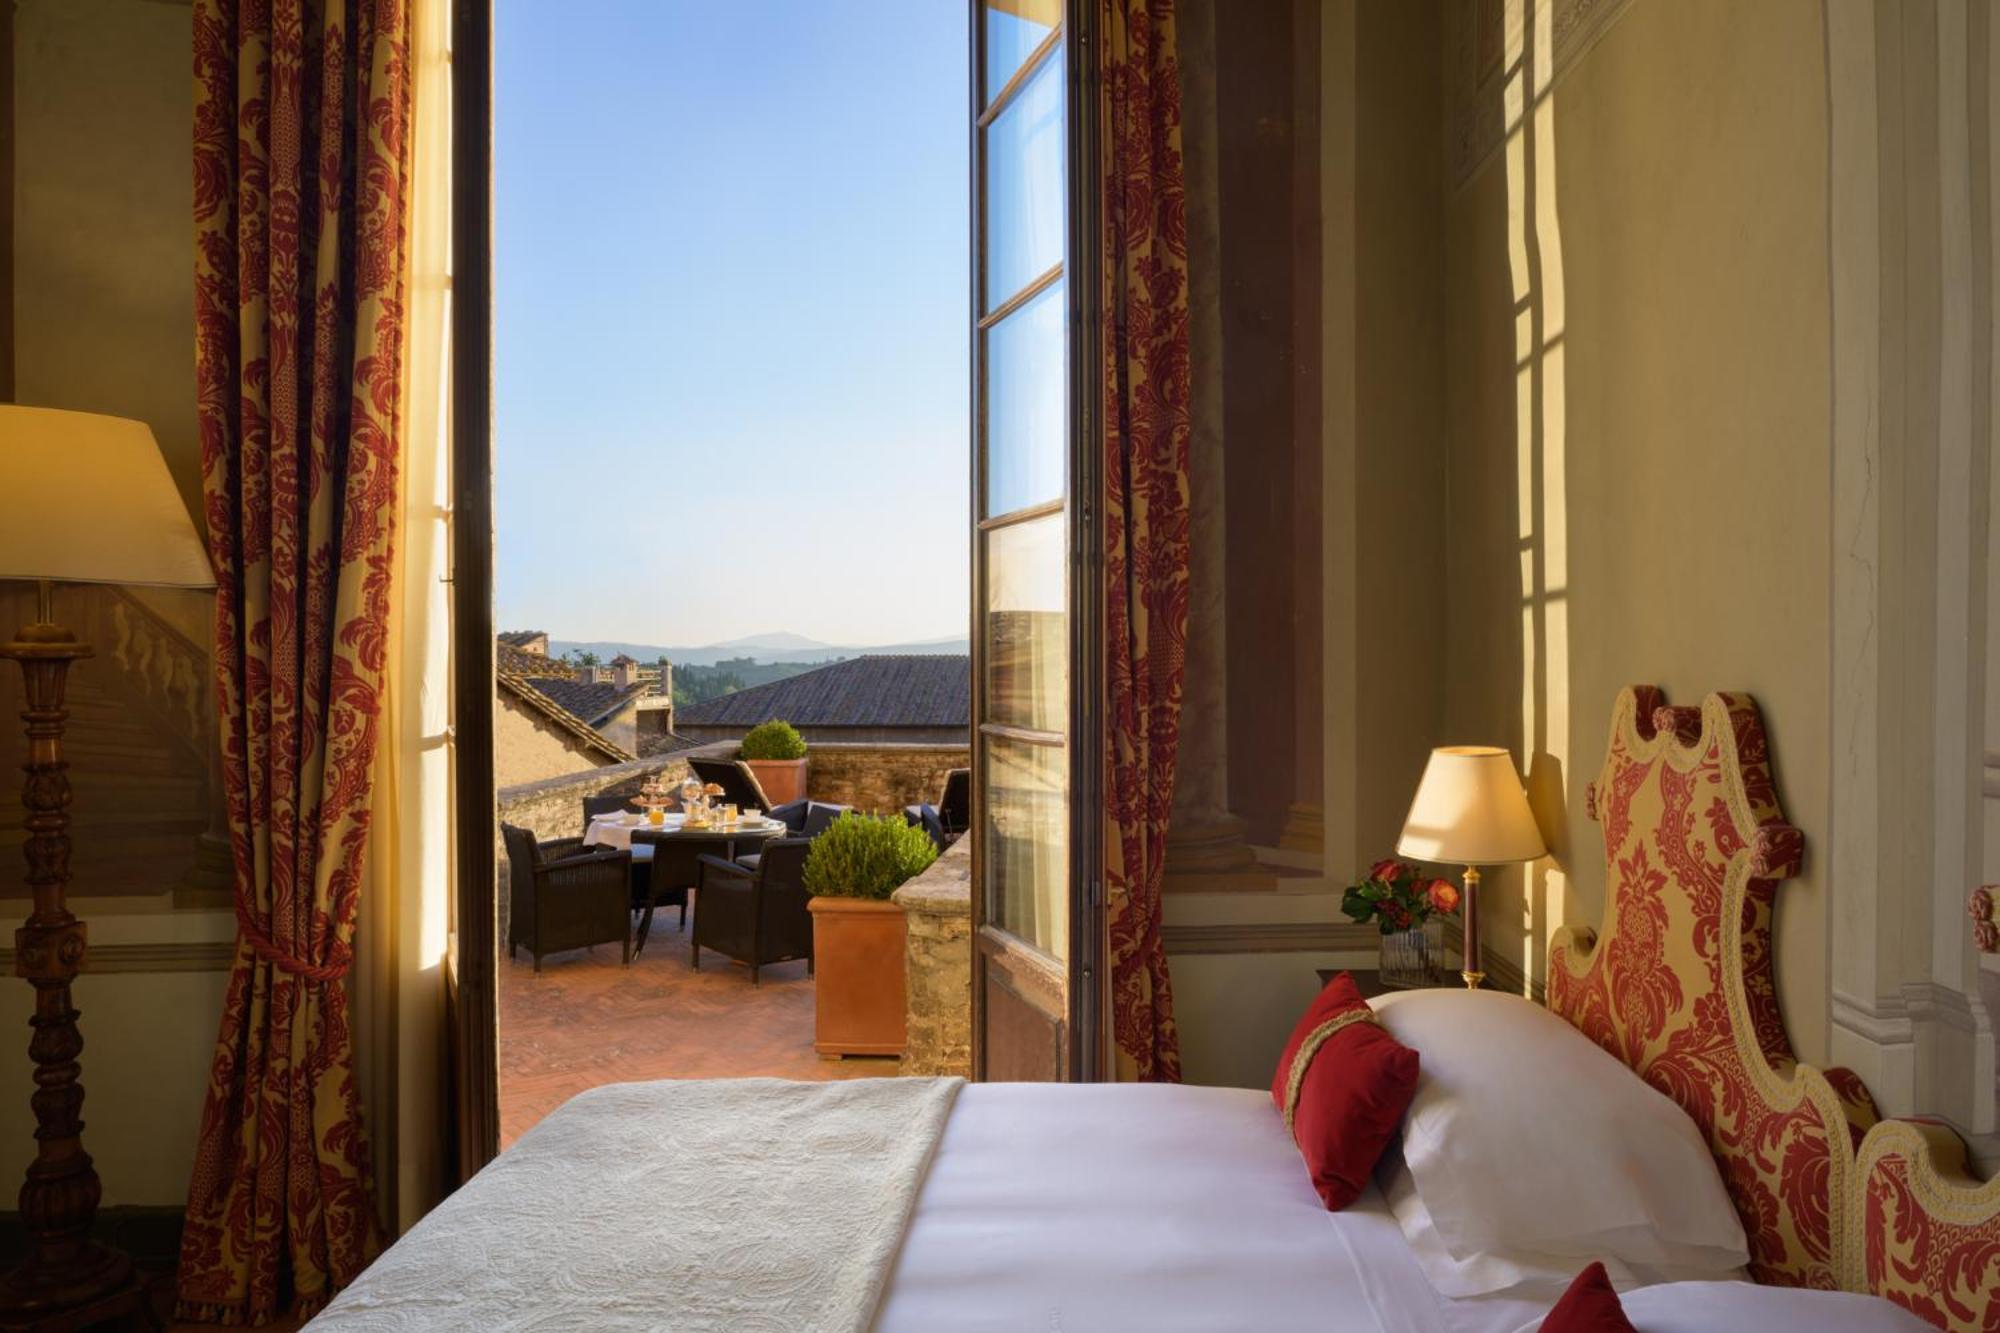 Grand Hotel Continental Siena - Starhotels Collezione Exterior photo